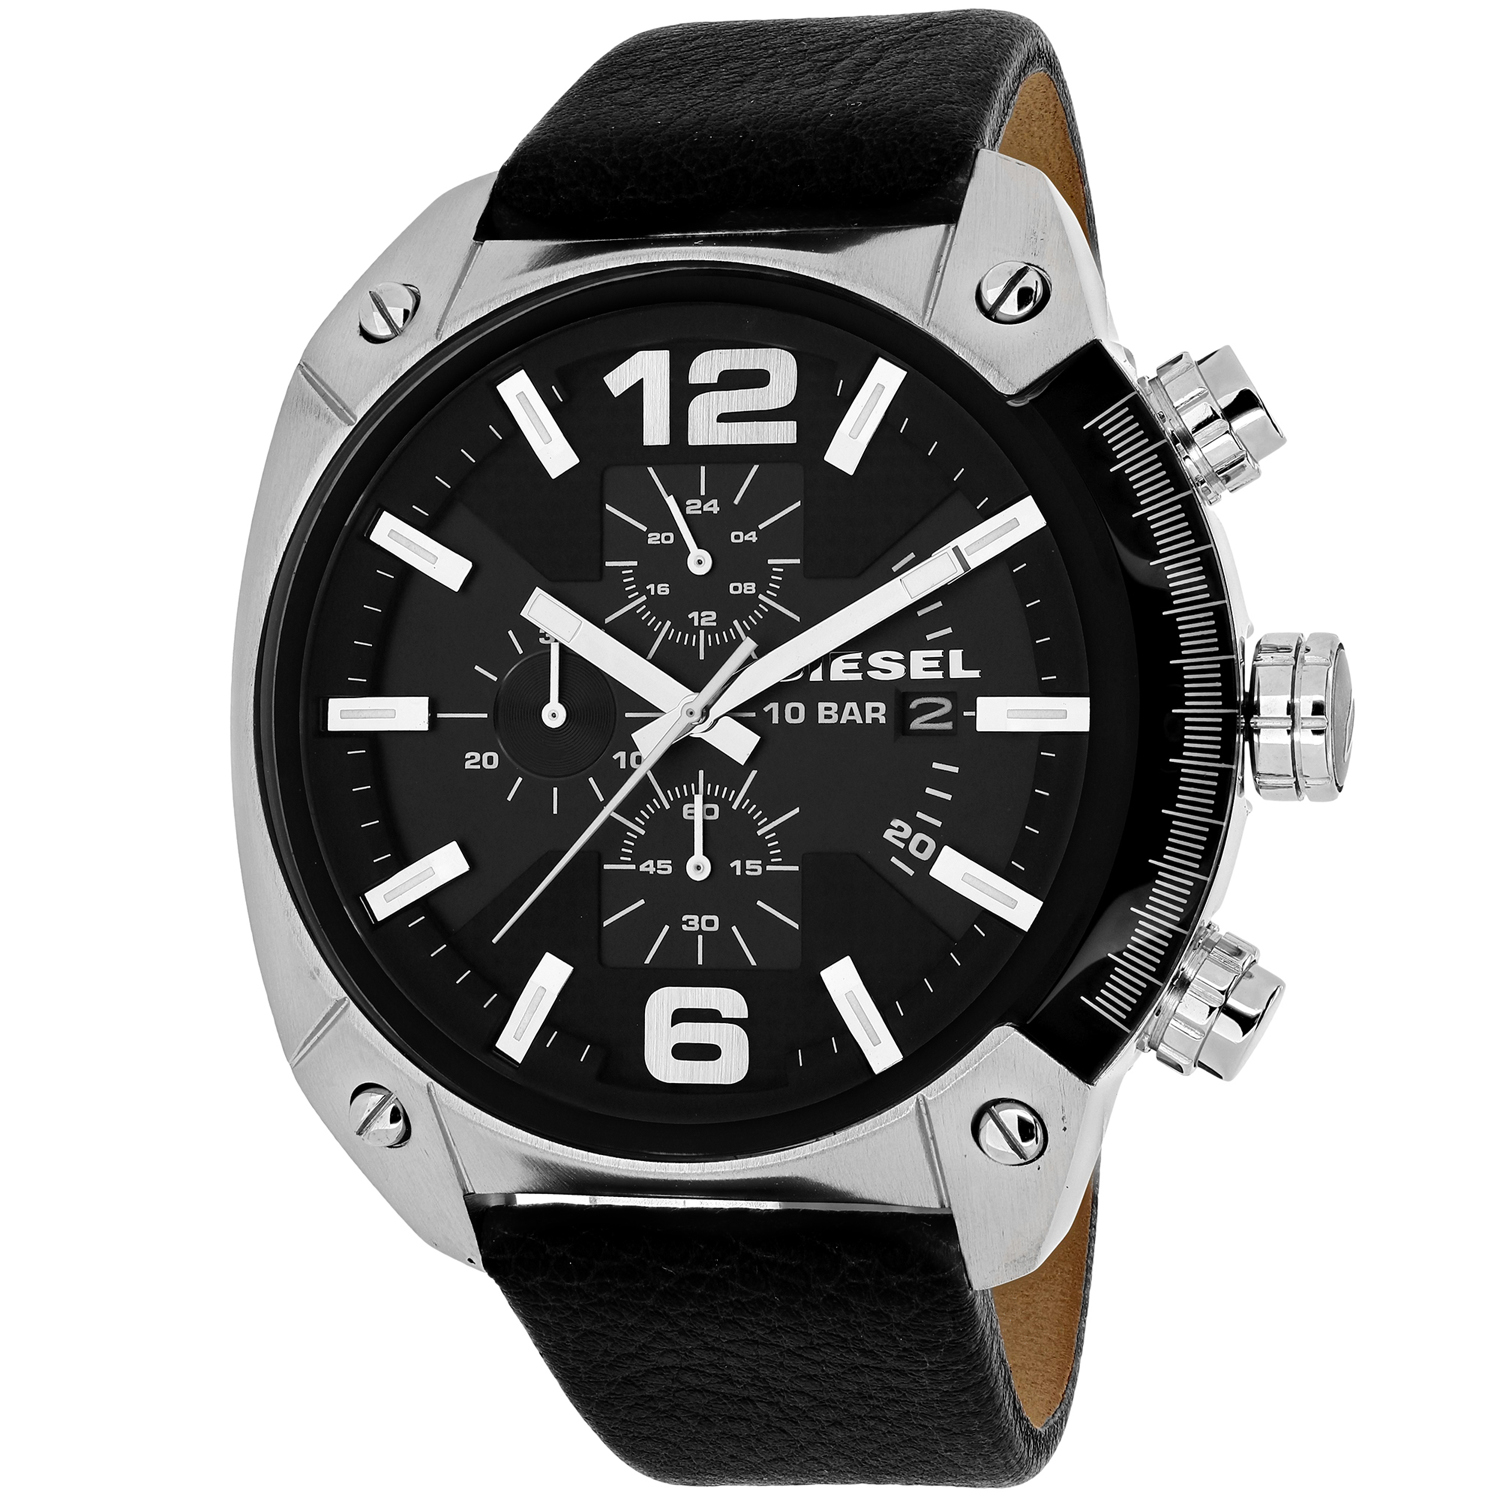 Diesel Men's Overflow Black Dial Watch - DZ4341 - image 1 of 3